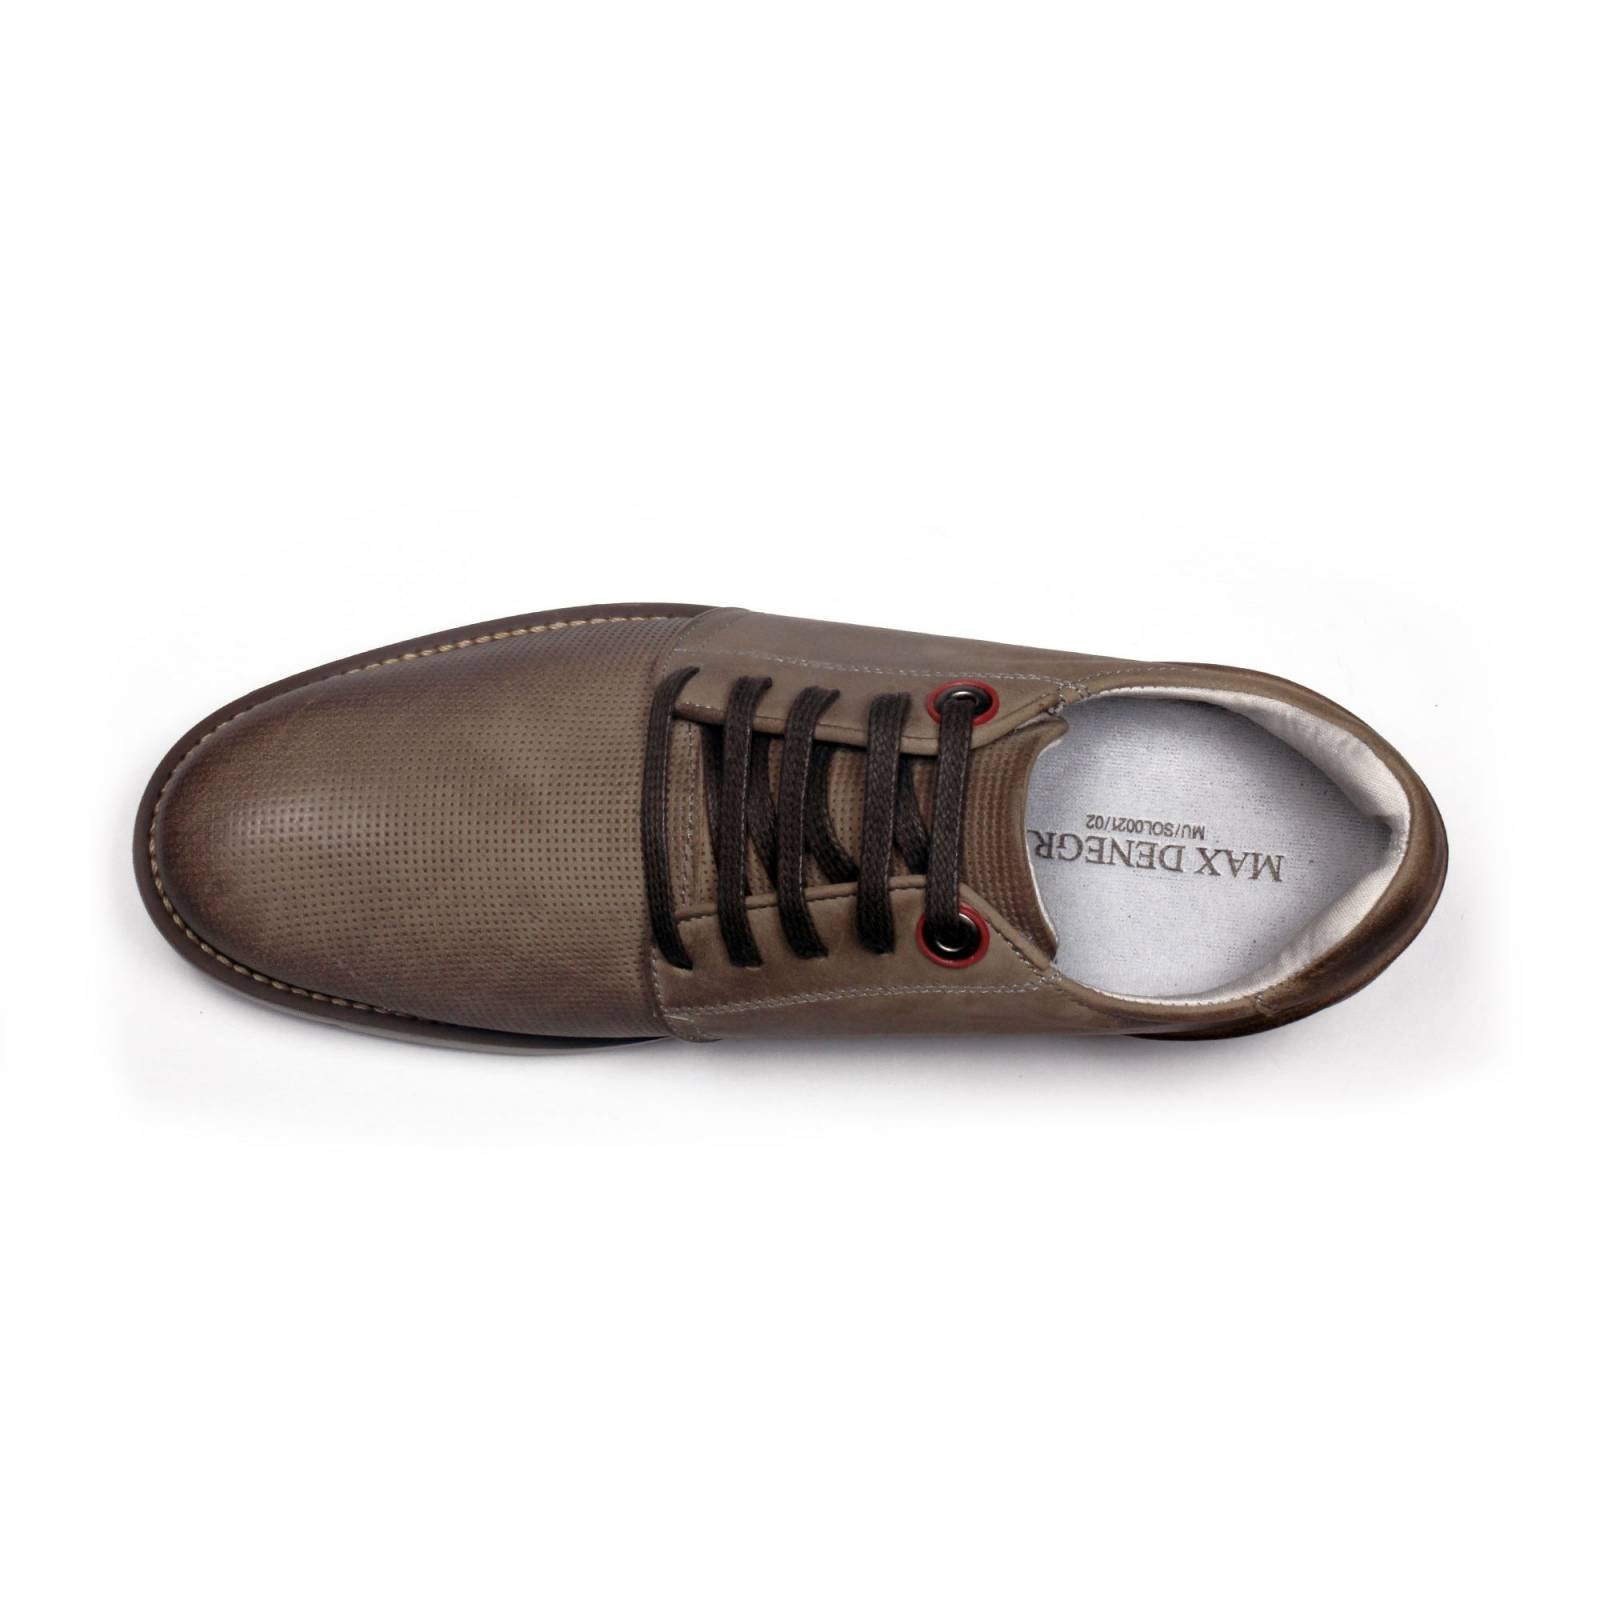 Zapato Casual Avenue Gris Max Denegri +7cms De Altura